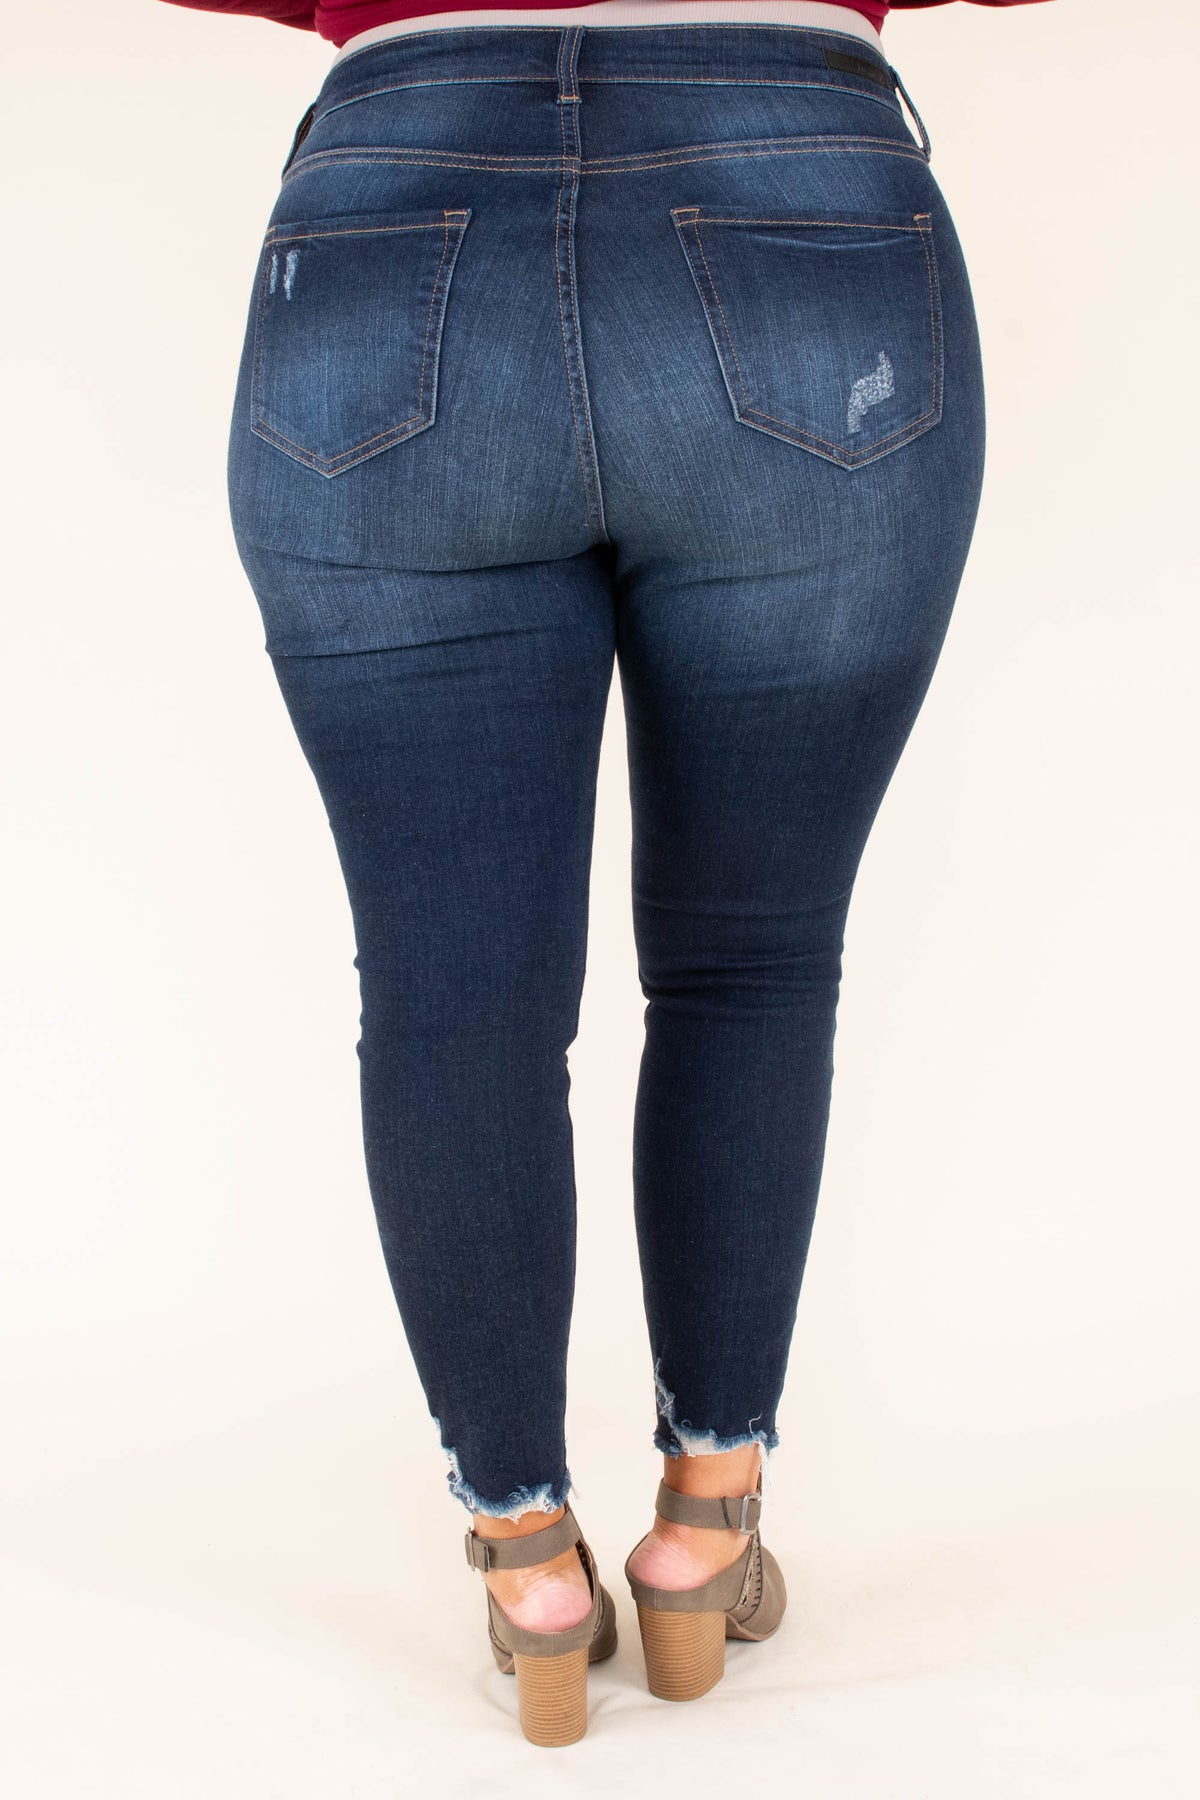 Plus Size Women's Distressed Jeans | Symbol Of Status Jeans | Chic Soul